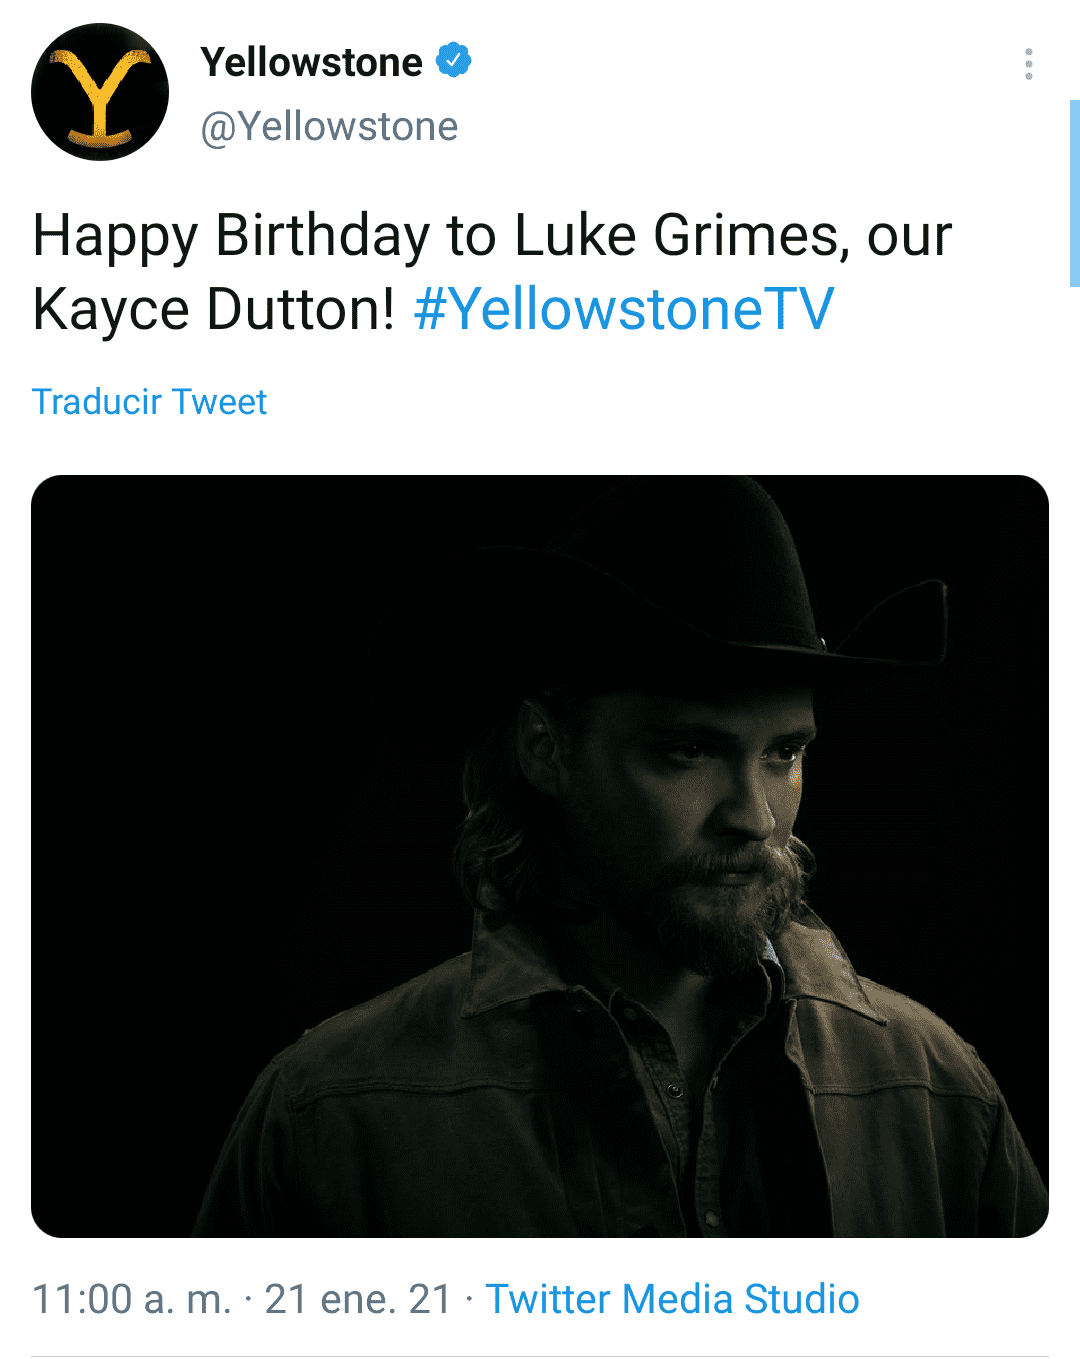 Luke Grimes as Kayce Dutton in "Yellowstone" | Photo: Twitter/Yellowstone